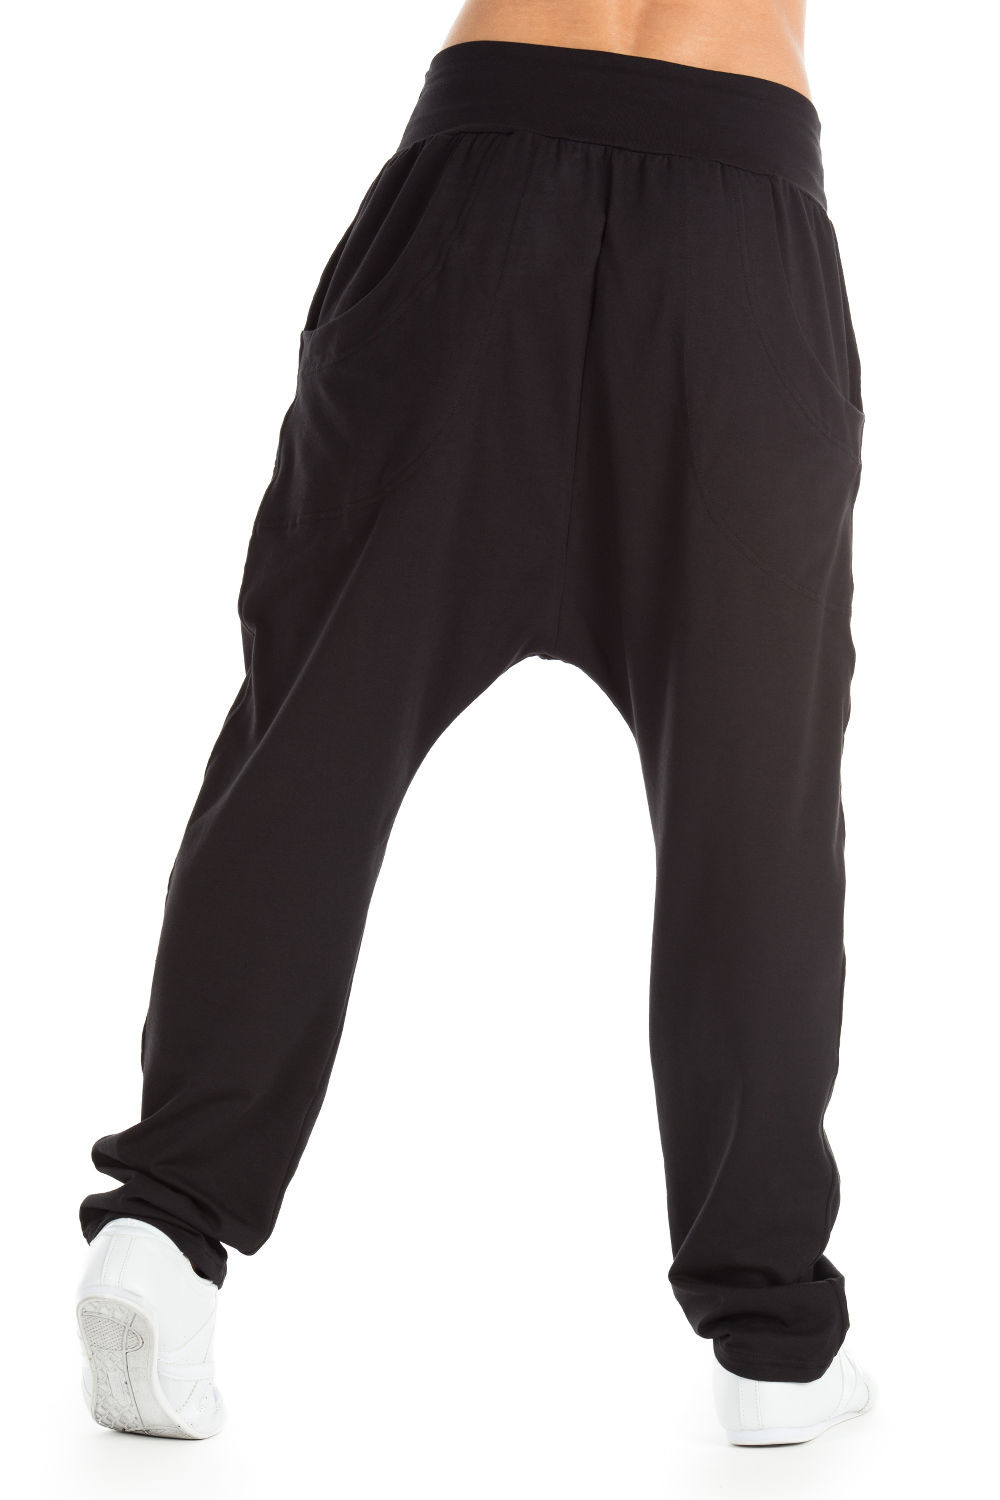 Winshape Style Pants Dance UNISEX WH13, 4Pocket schwarz,